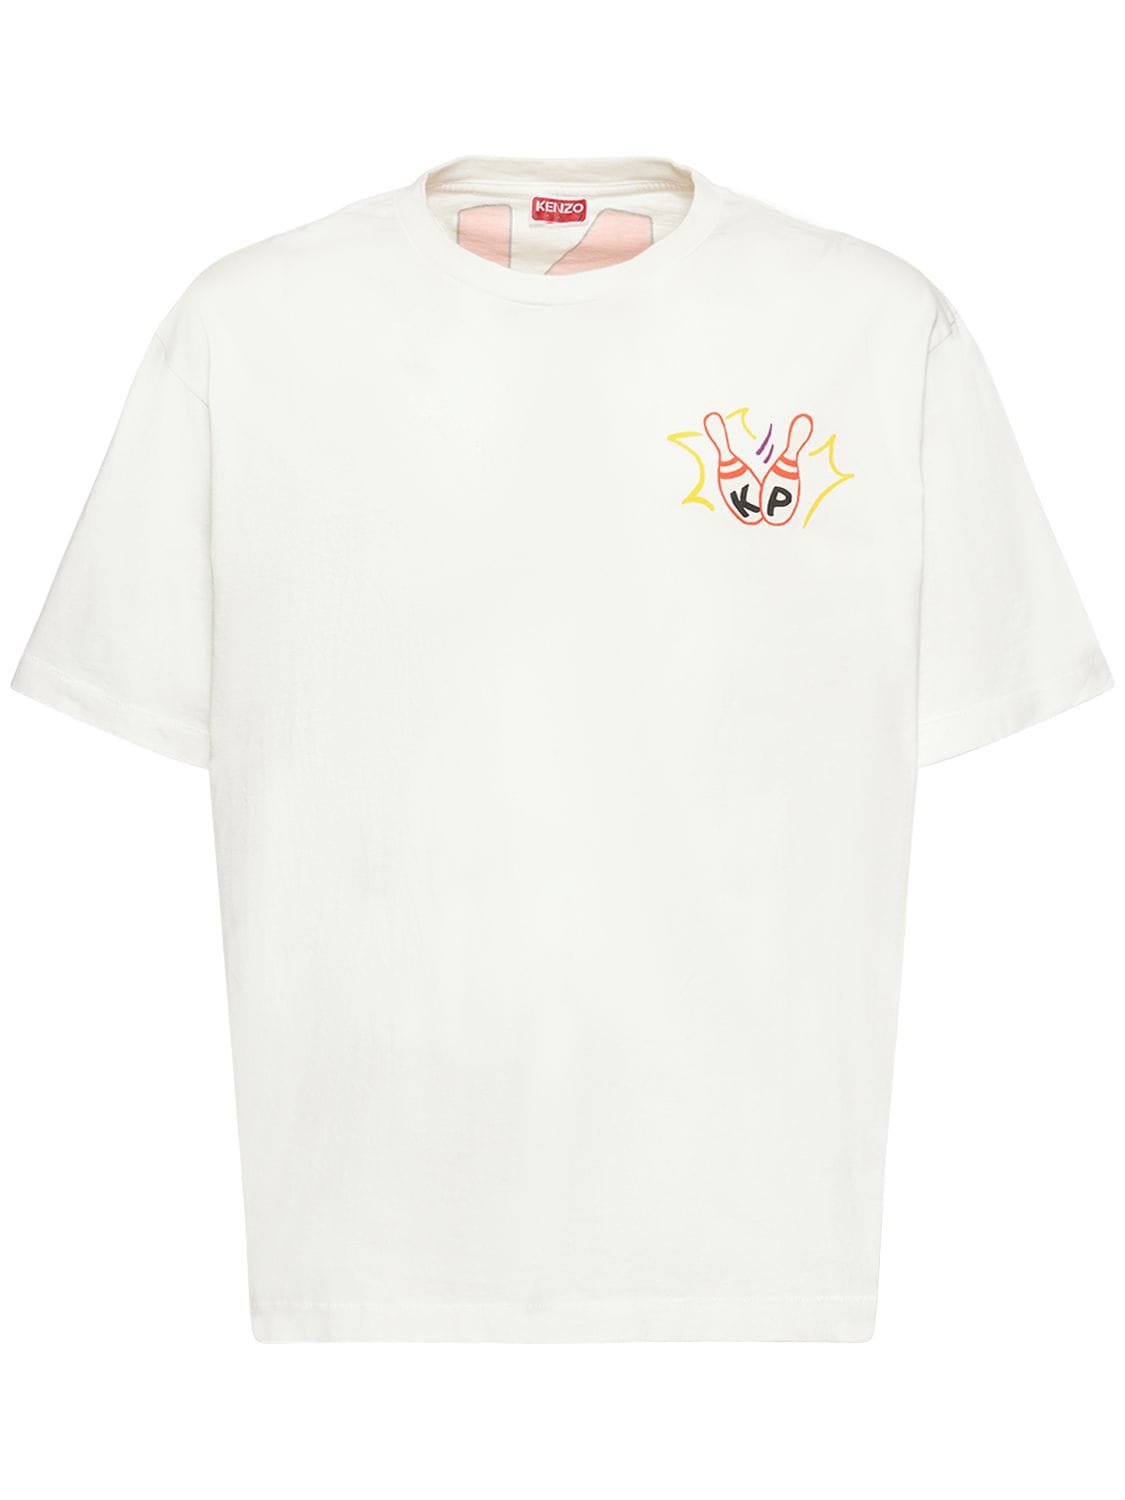 KENZO PARIS Bowling Print Cotton Oversize T-shirt